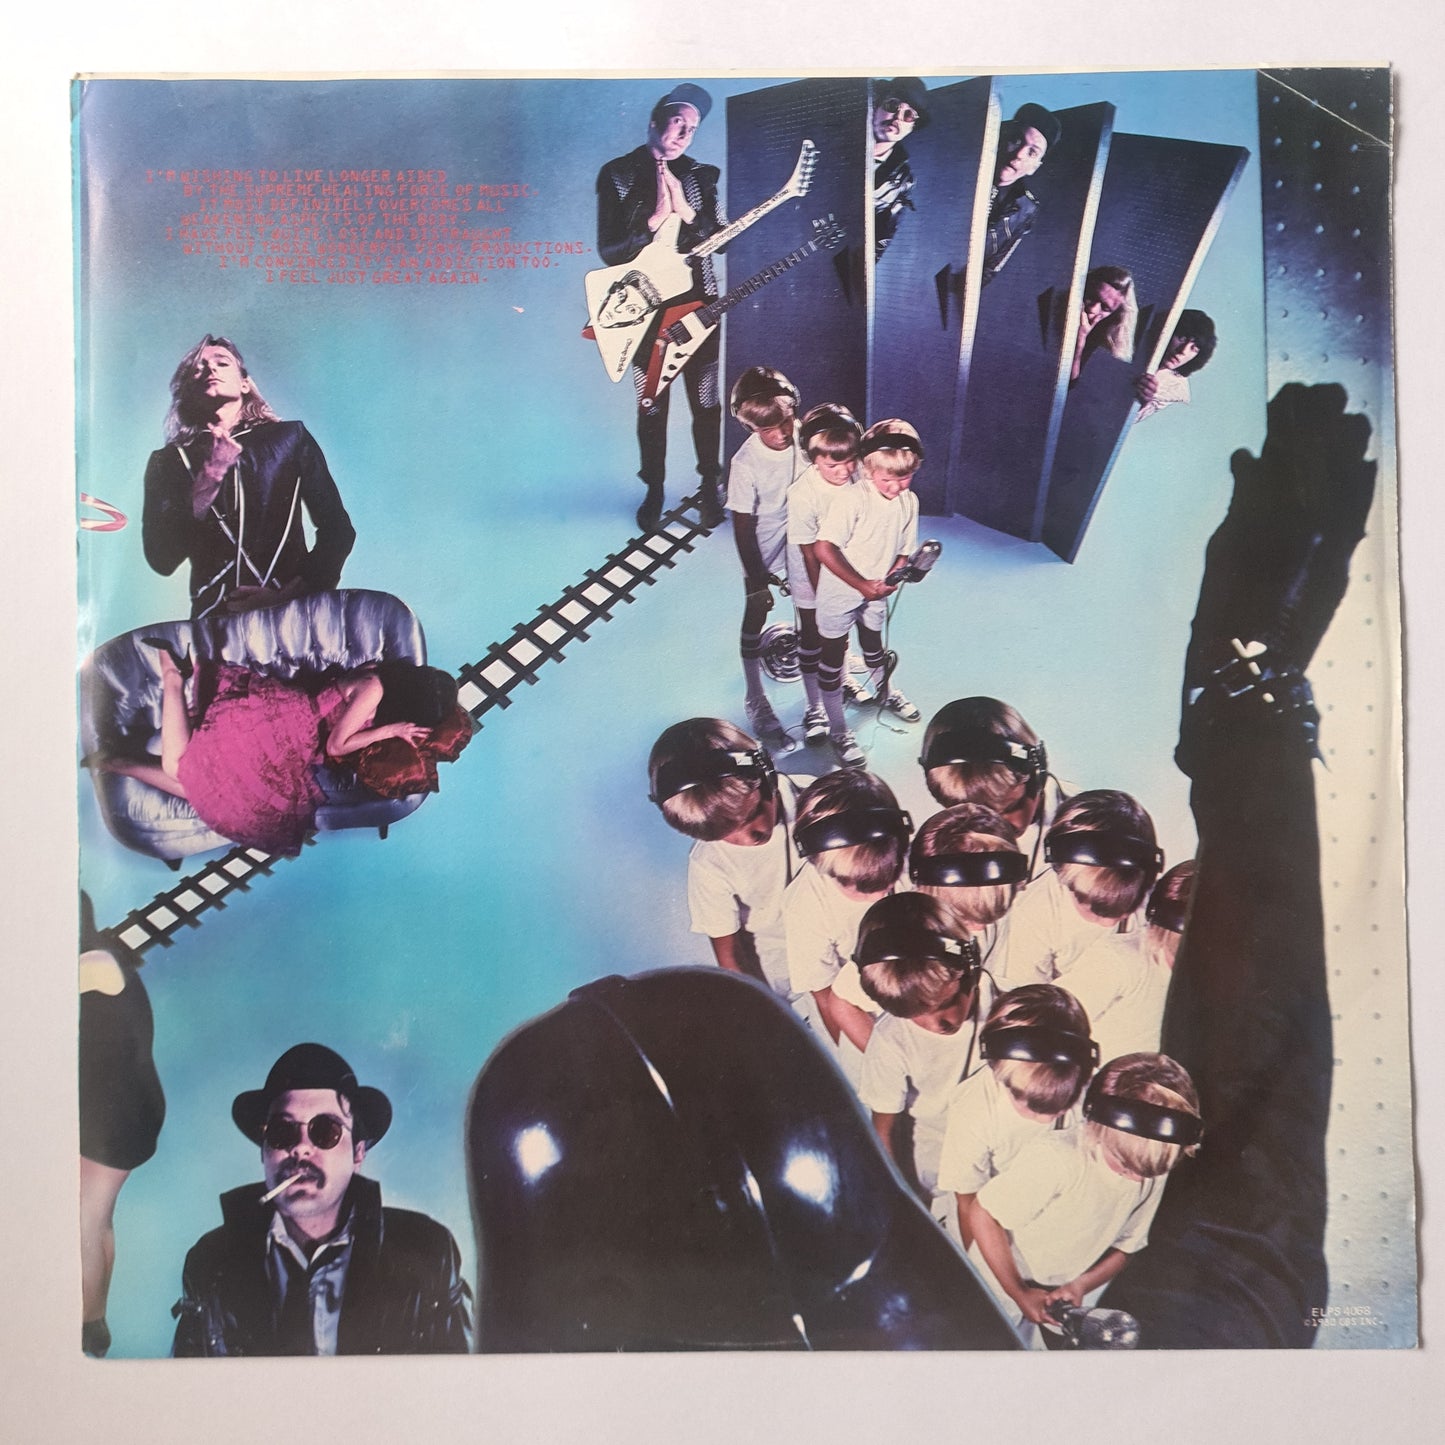 Cheap Trick – All Shook Up - 1980 - Vinyl Record